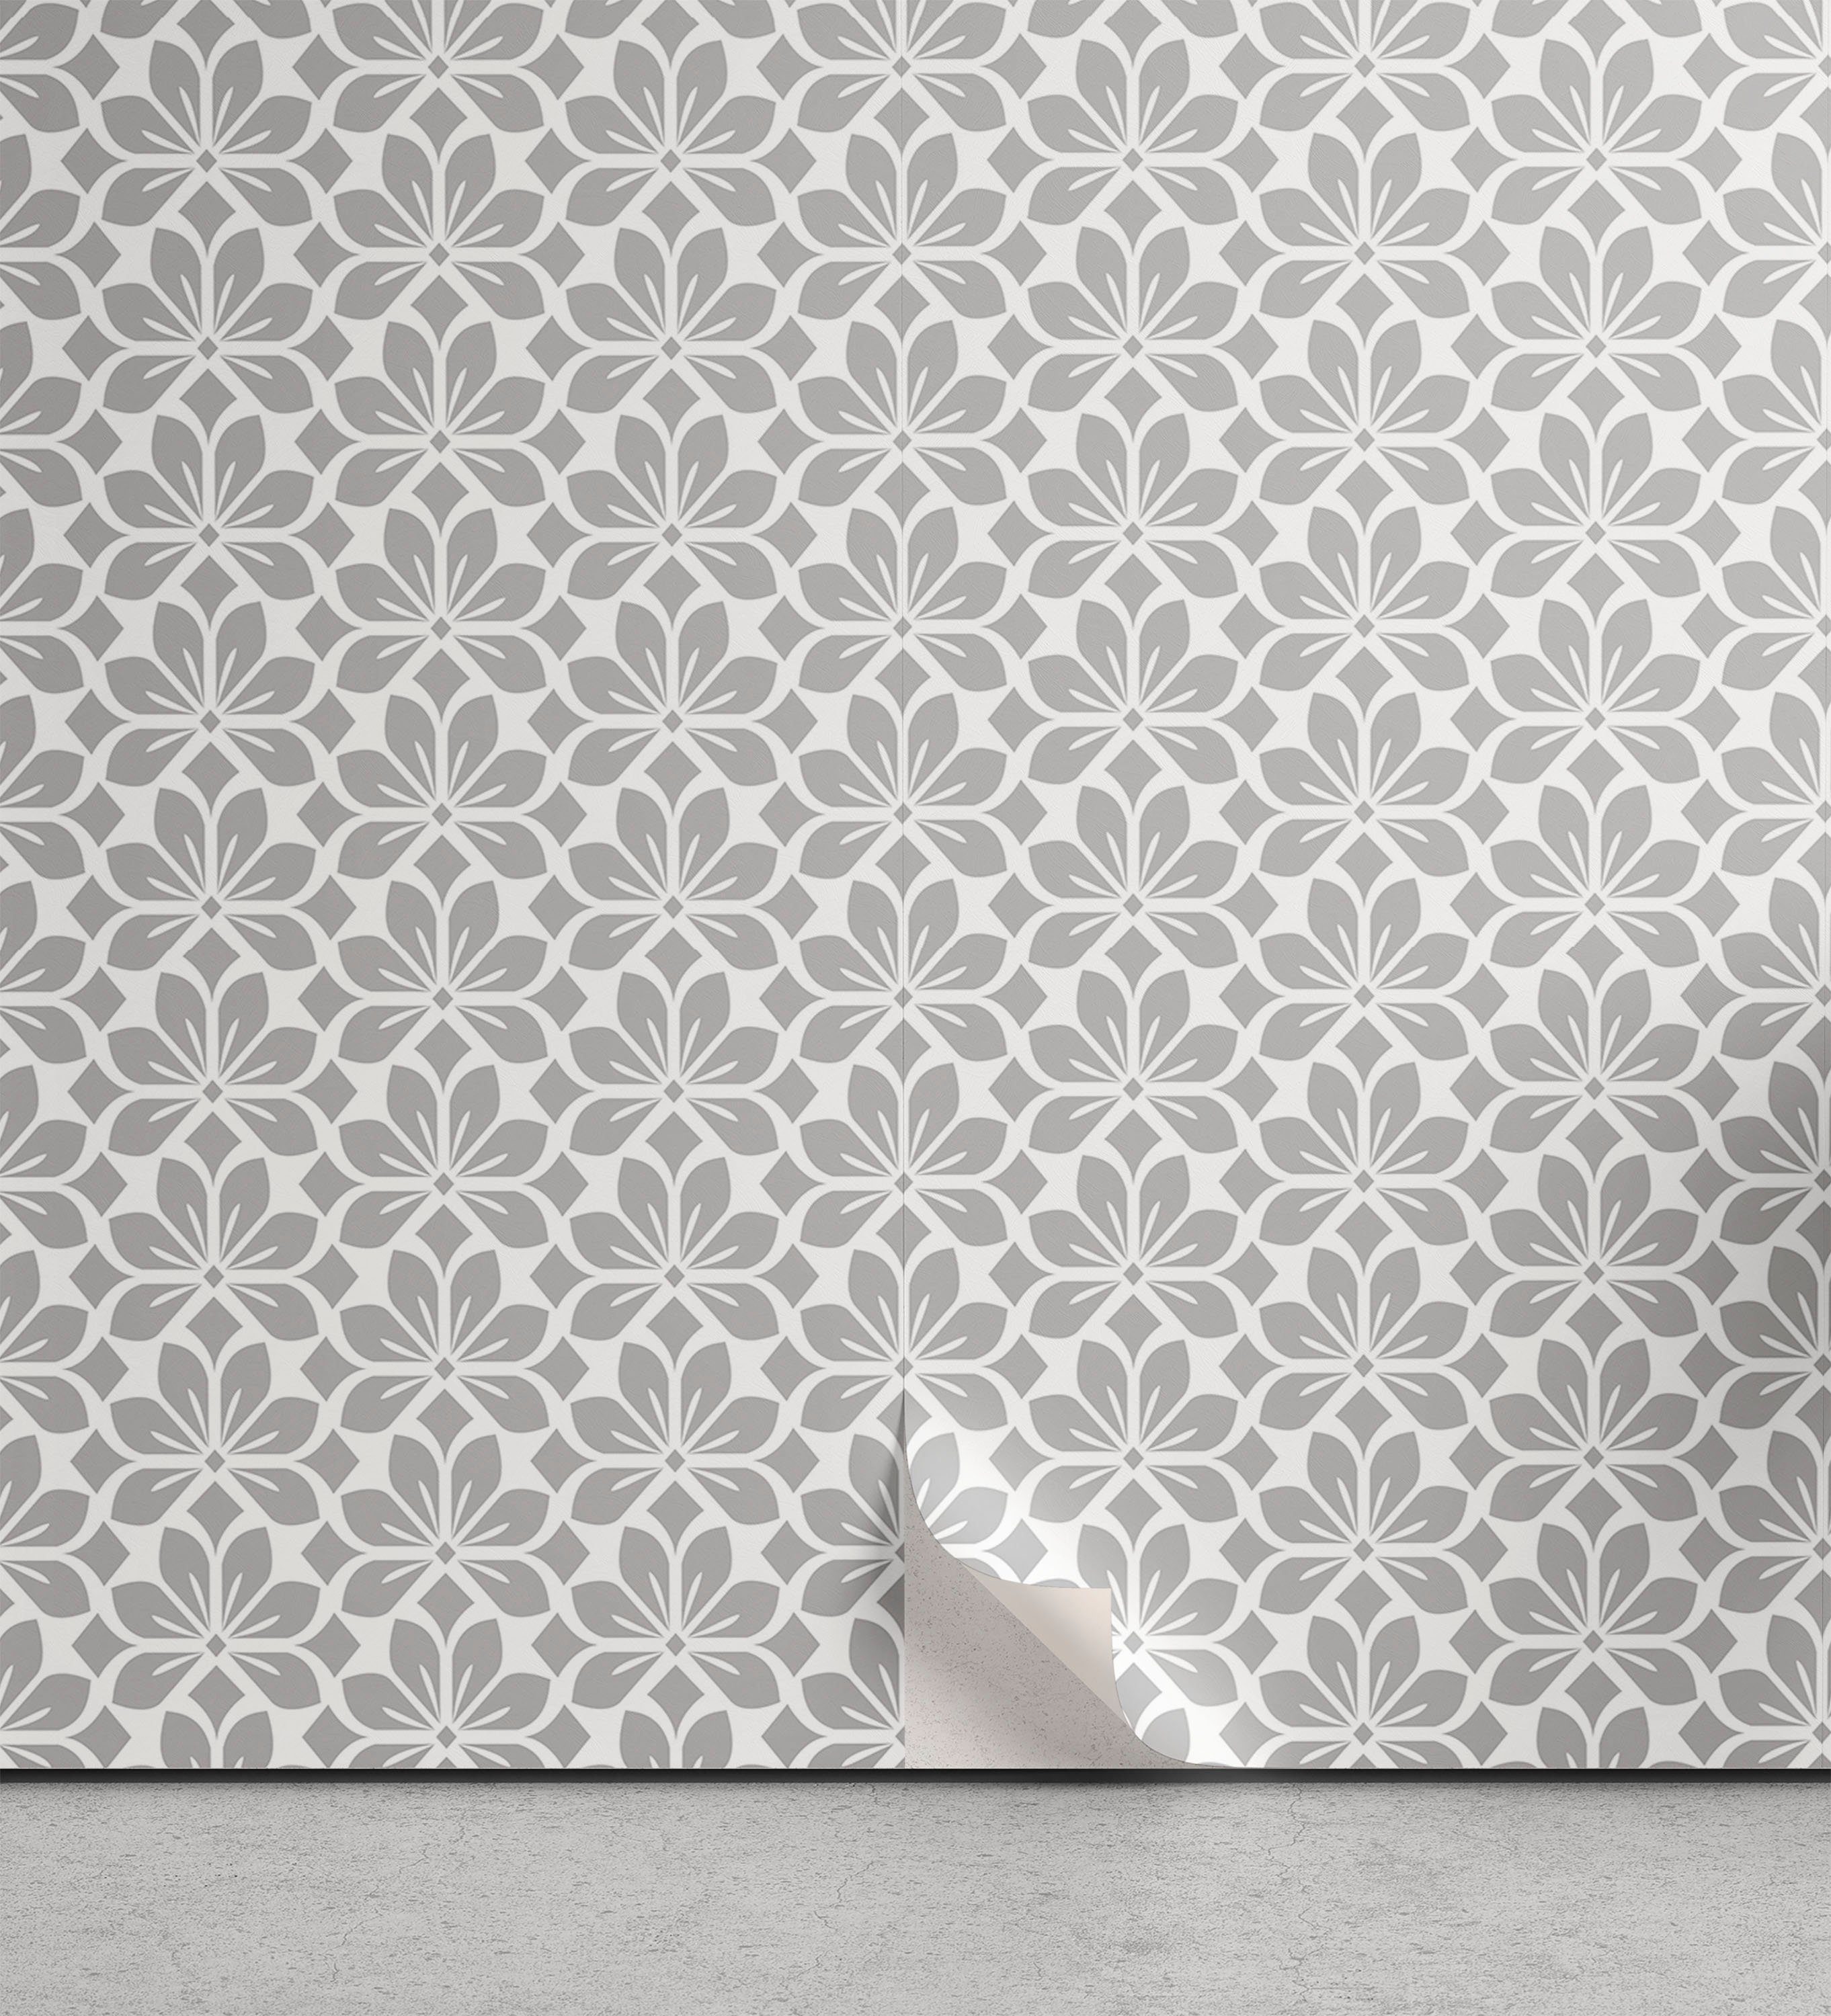 Abakuhaus Vinyltapete selbstklebendes Wohnzimmer Küchenakzent, Abstrakt Blumen inspirierte Motive